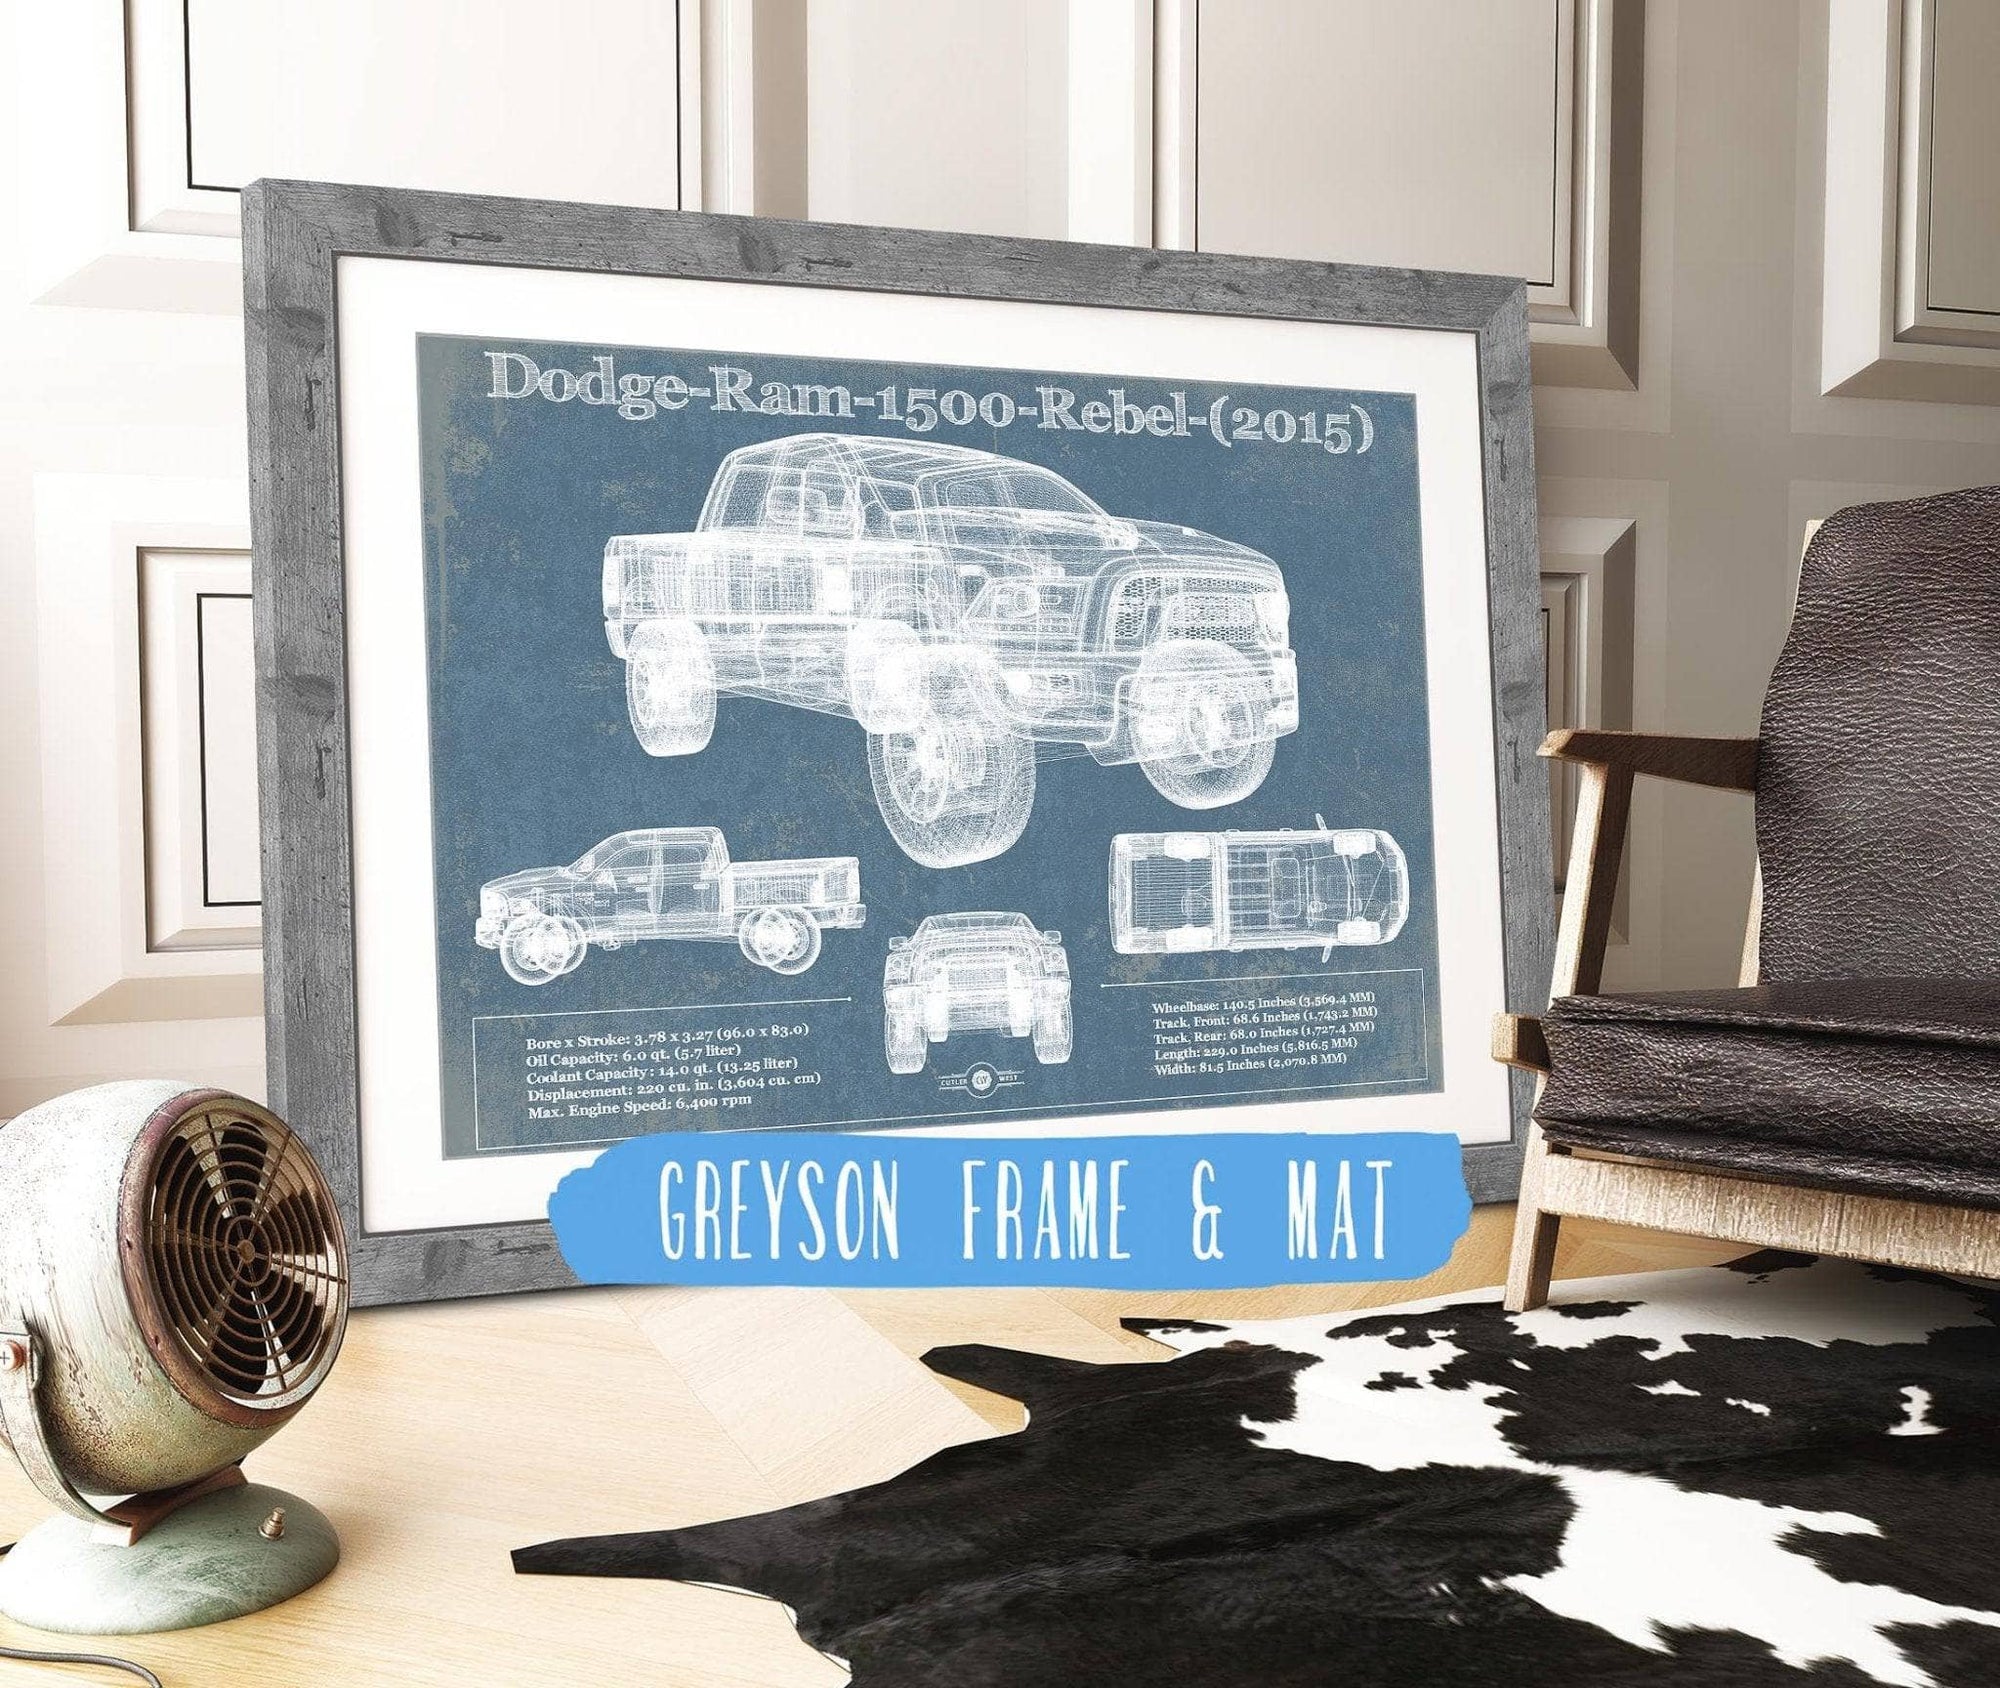 Cutler West Dodge Collection 14" x 11" / Greyson Frame & Mat Dodge Ram 1500 Rebel (2015) Vintage Blueprint Auto Print 833110096_58579